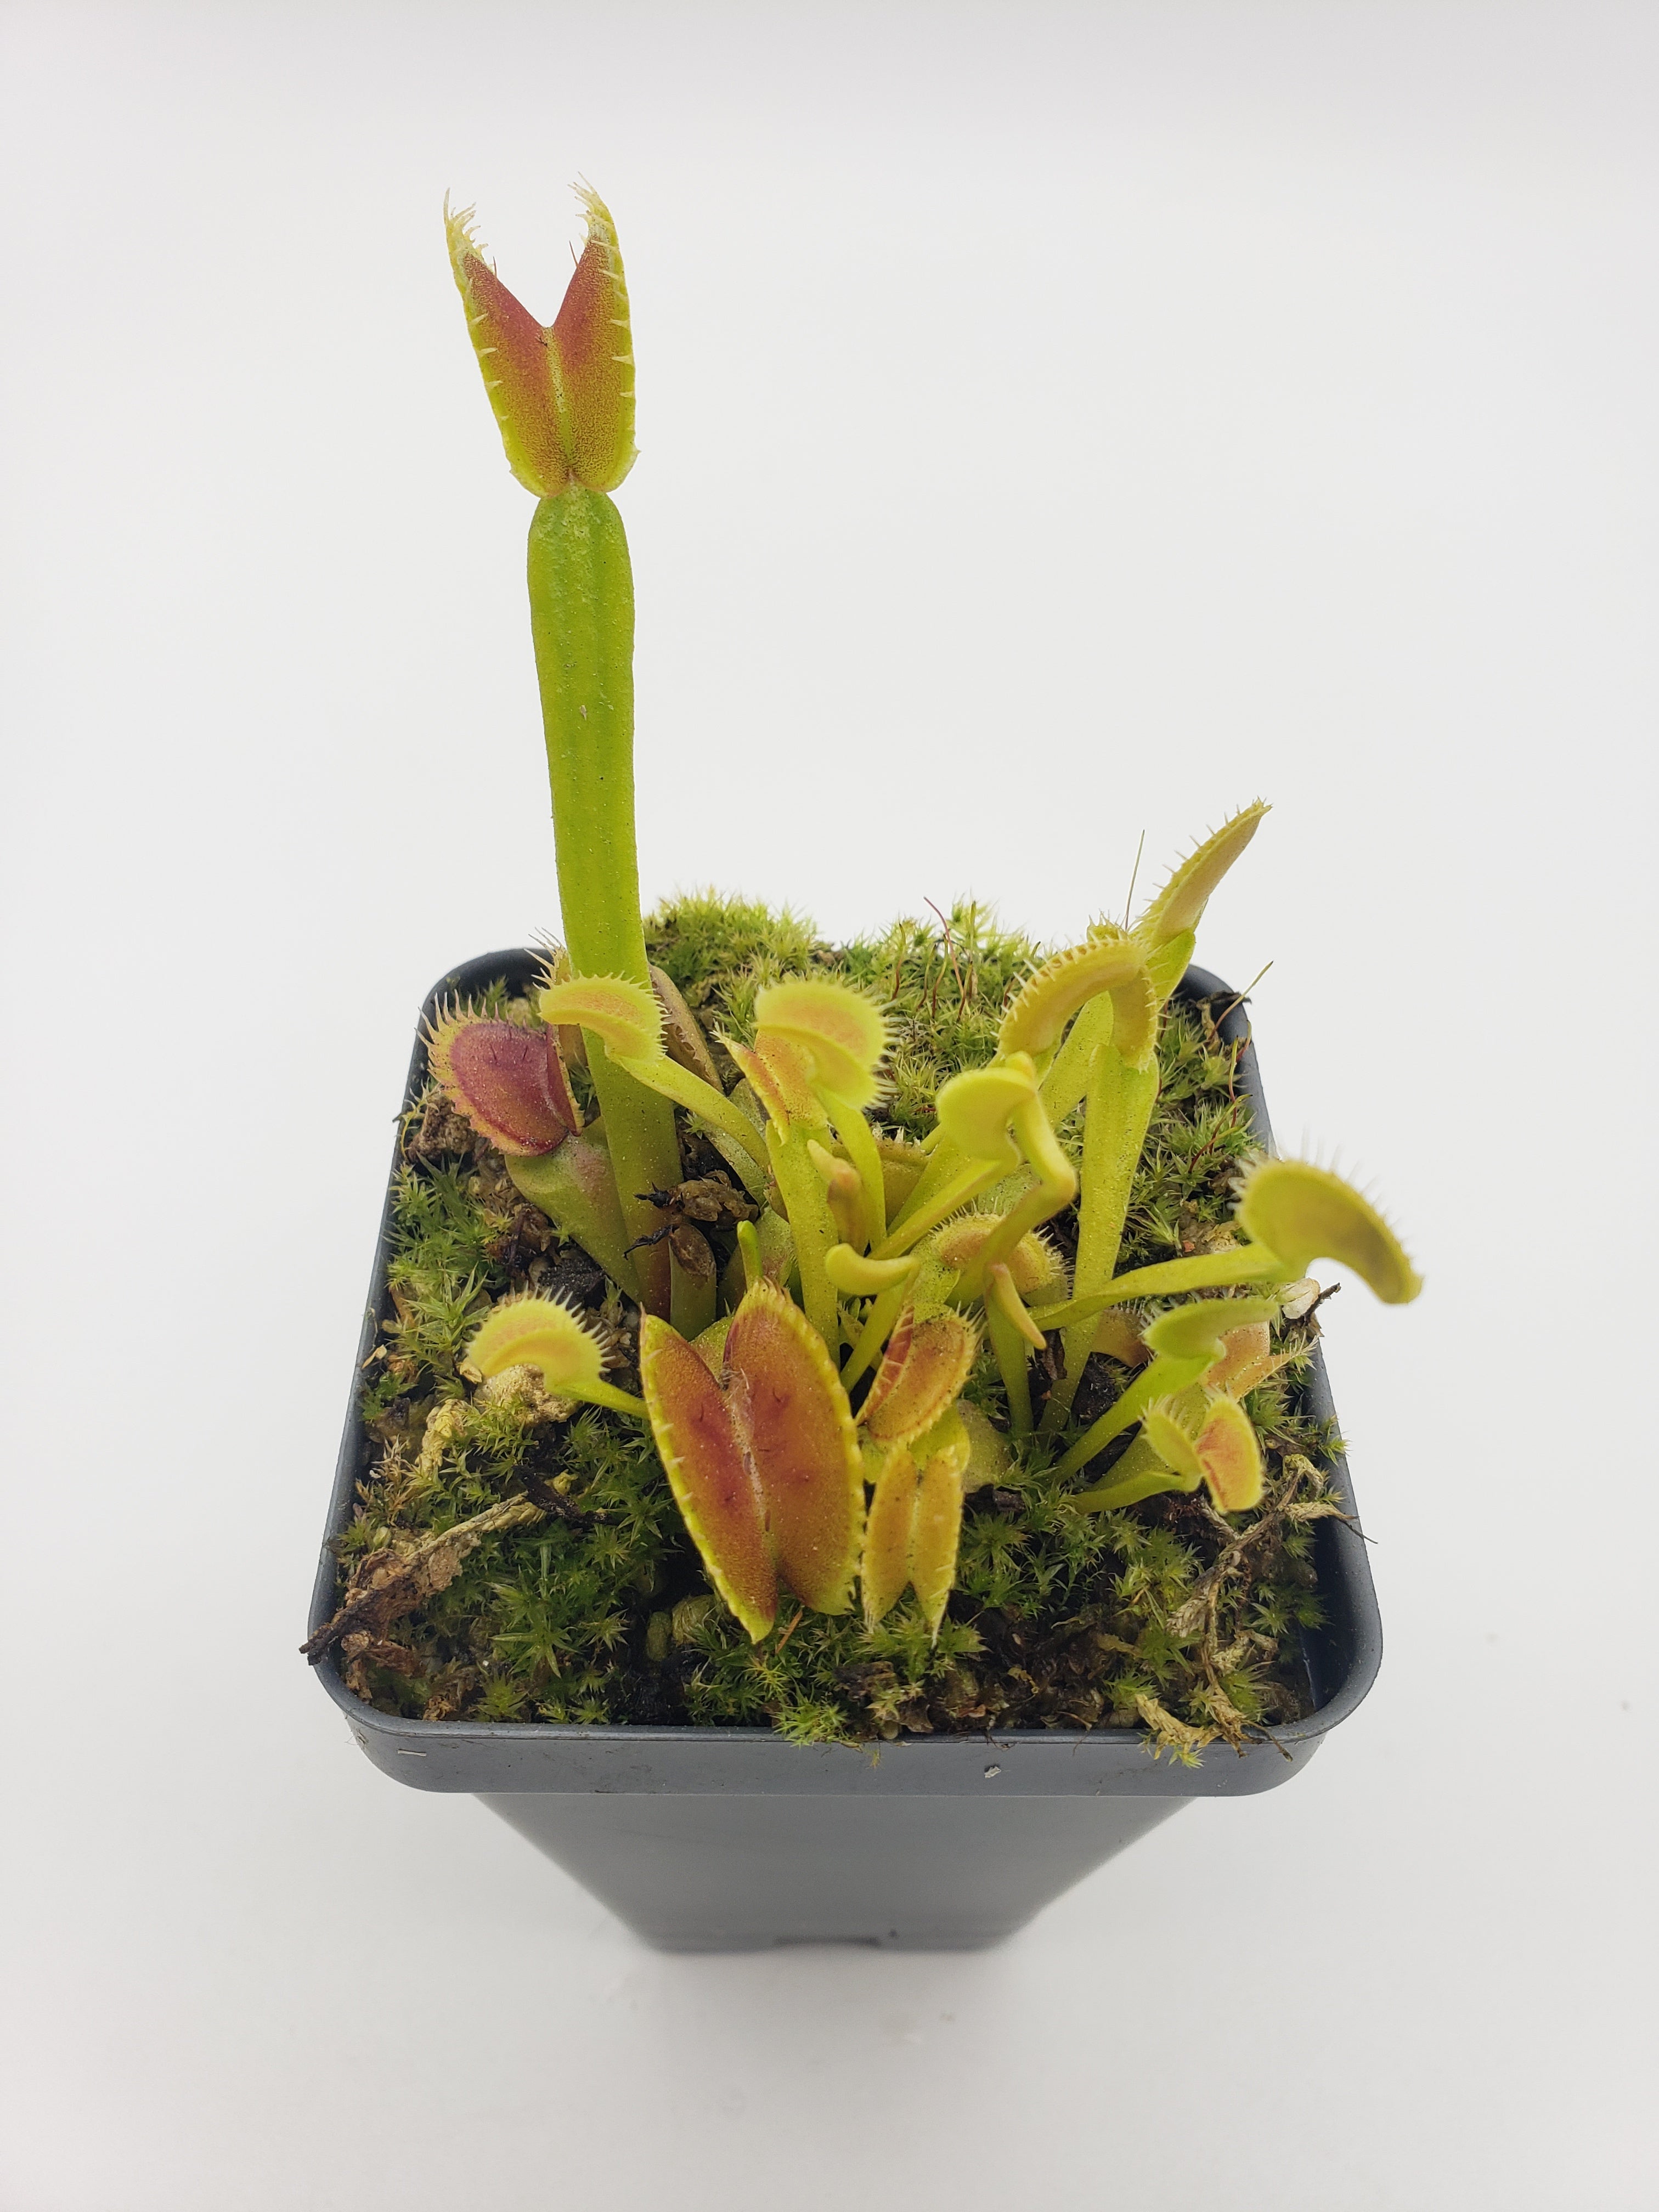 Venus flytrap (Dionaea muscipula) "Dente" - Rainbow Carnivorous Plants LLC